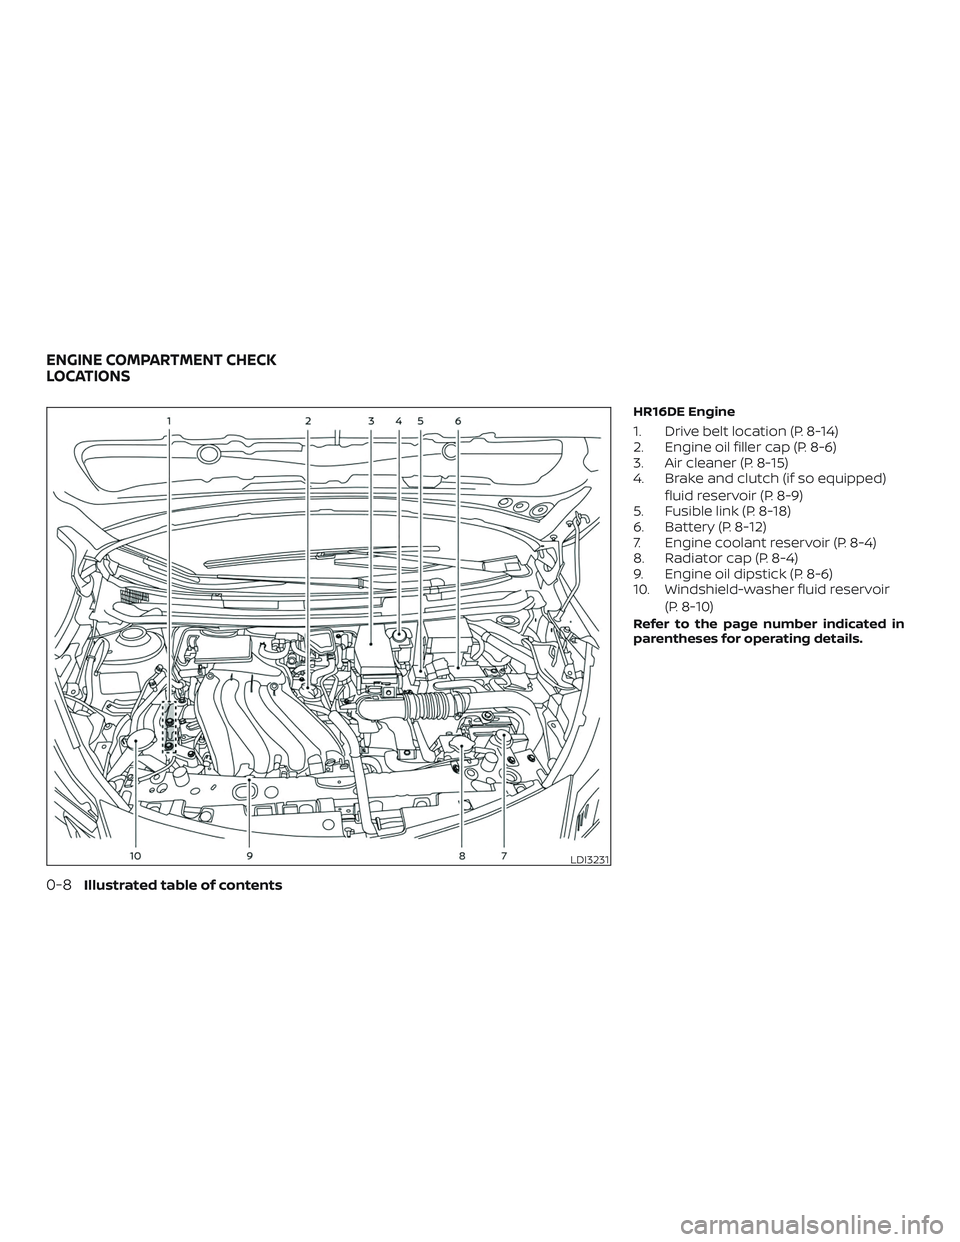 NISSAN MICRA 2019  Owner´s Manual HR16DE Engine
1. Drive belt location (P. 8-14)
2. Engine oil filler cap (P. 8-6)
3. Air cleaner (P. 8-15)
4. Brake and clutch (if so equipped)fluid reservoir (P. 8-9)
5. Fusible link (P. 8-18)
6. Batt